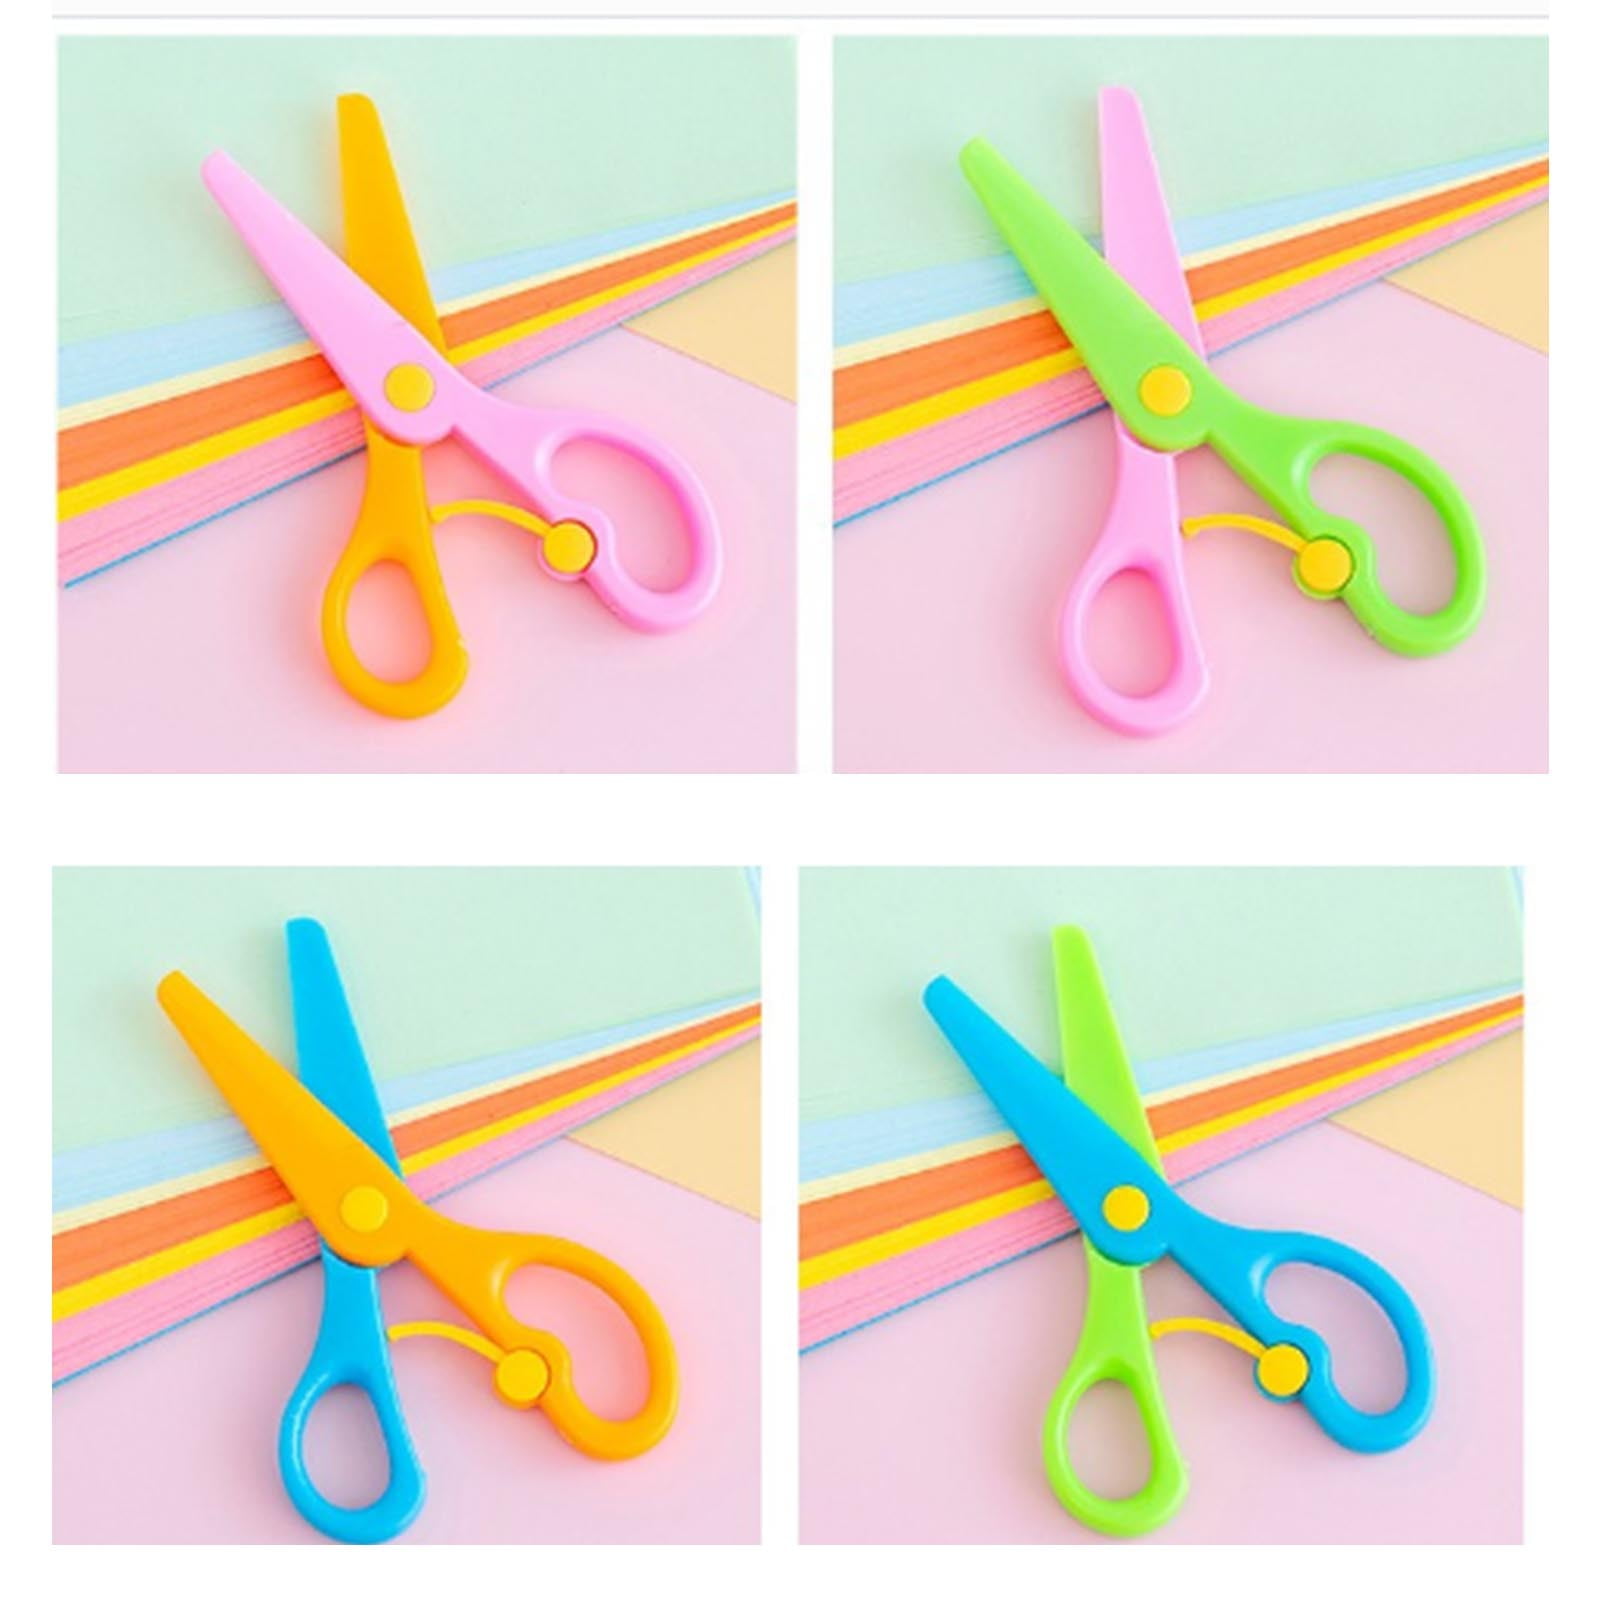 JHGJ 3 Pieces Toddler Safety Scissors in Animal Designs, Kids Preschool  Training Scissors Child Plastic Art Craft Scissors for Paper-Cut (3 Pieces)